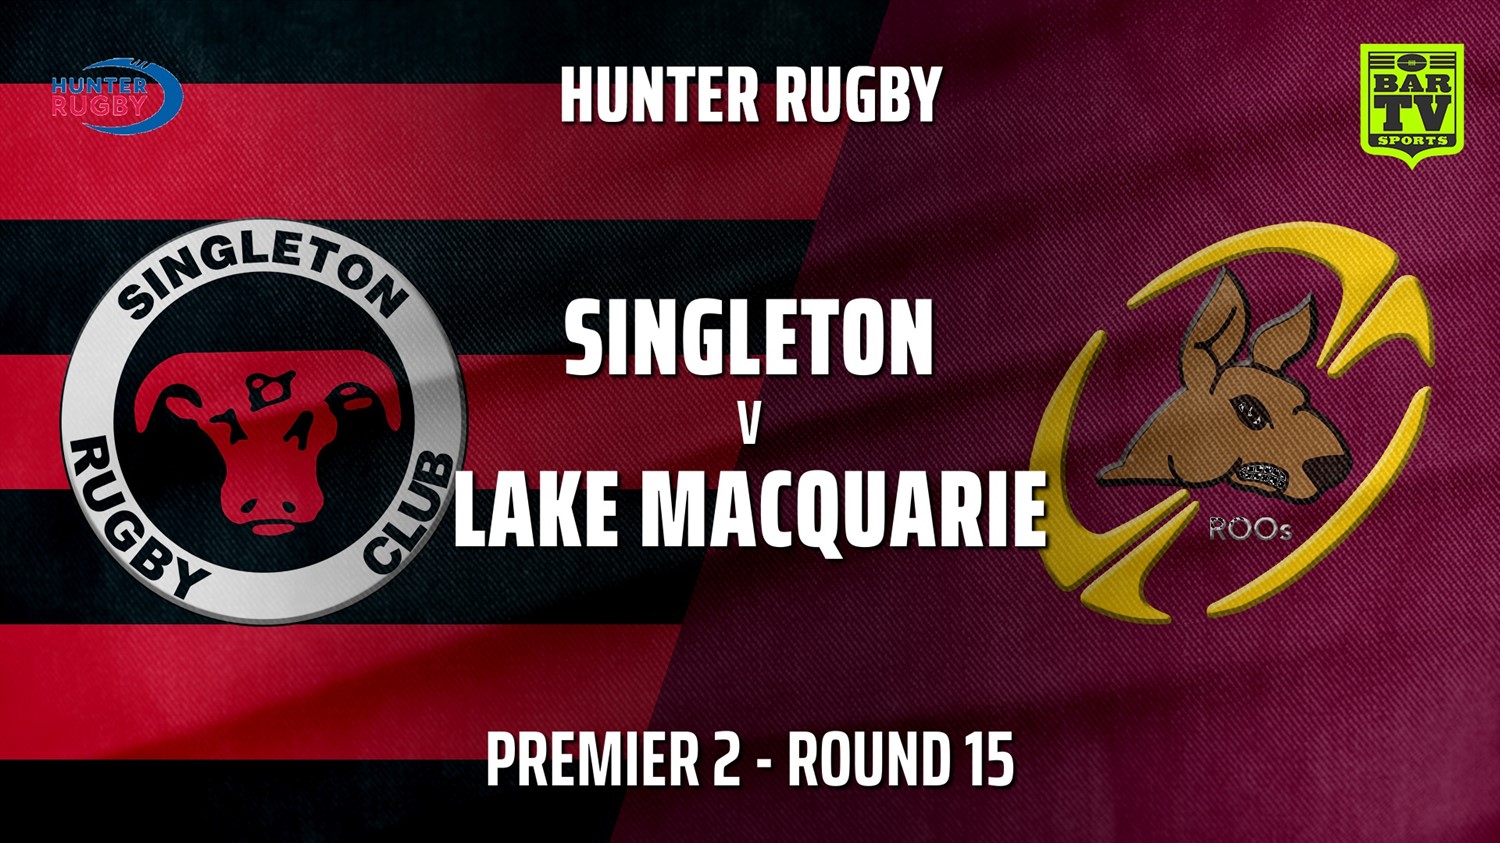 210731-Hunter Rugby Round 15 - Premier 2 - Singleton Bulls v Lake Macquarie Slate Image